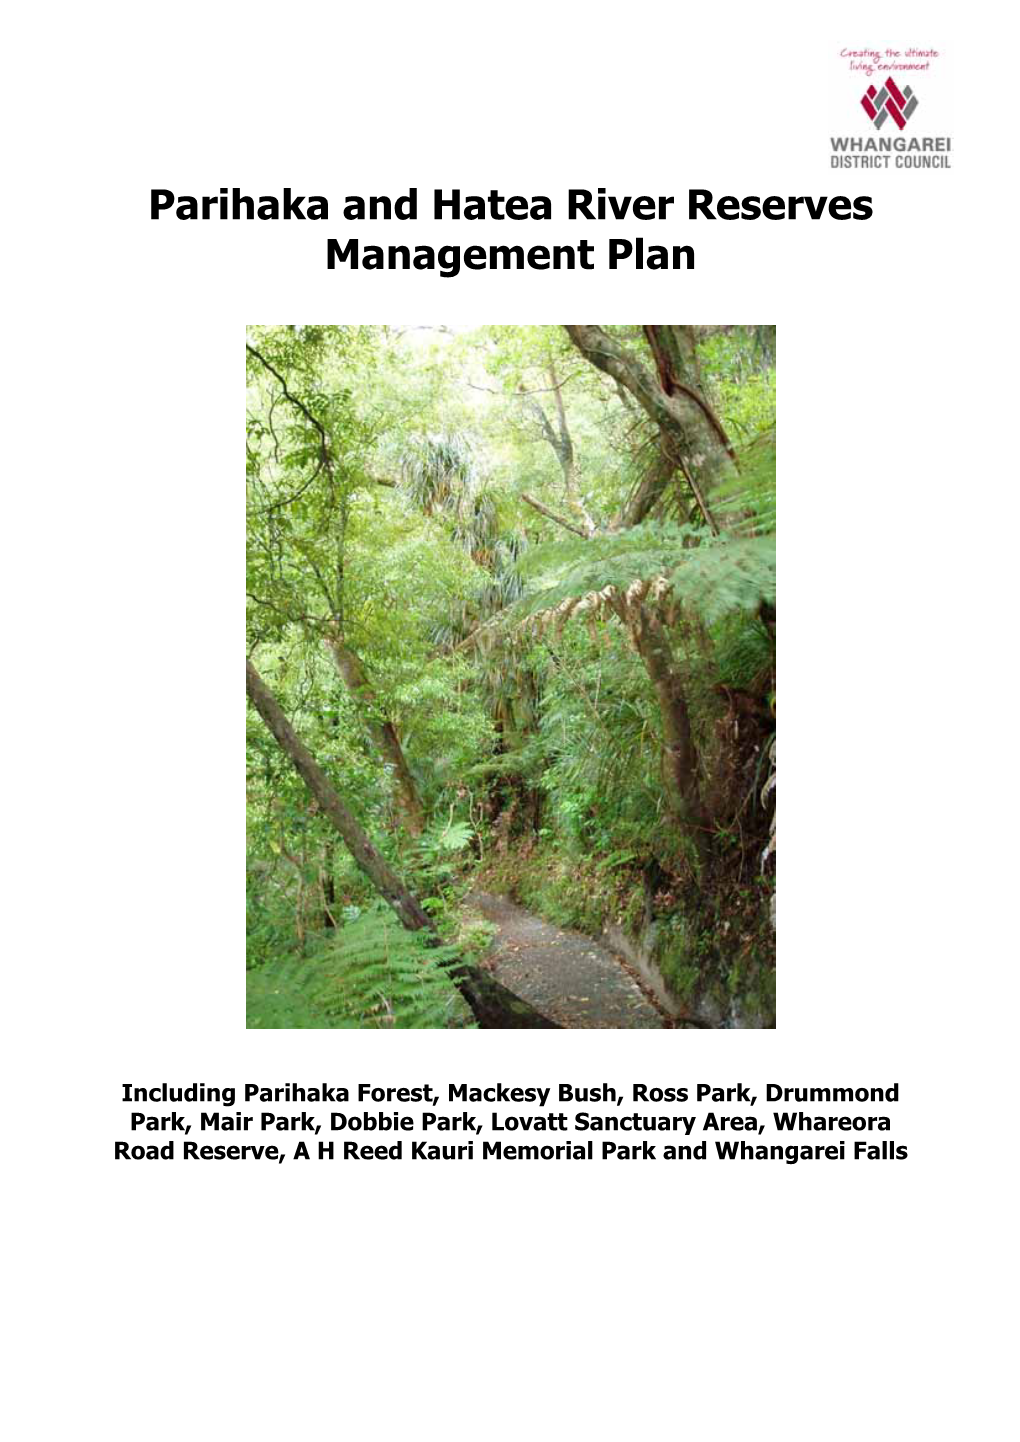 Parihaka and Hatea River Reserves Management Plan 2009(PDF, 2MB)